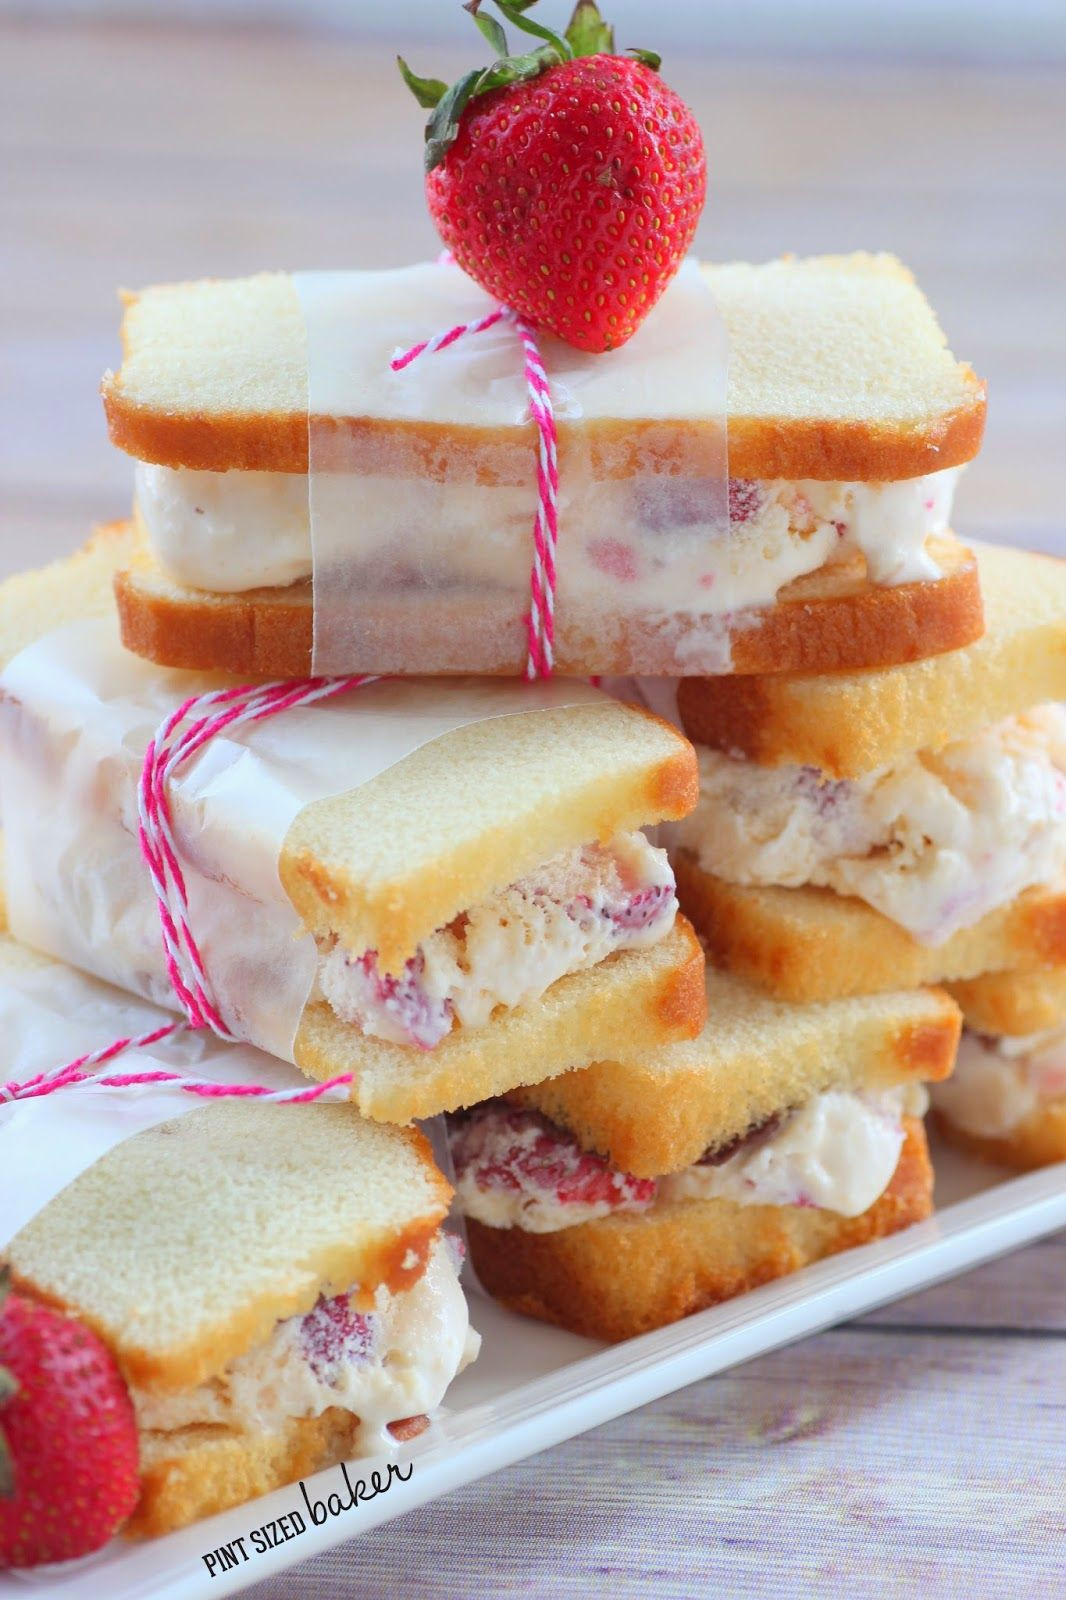 Ice Cream Sandwich Desserts Recipe
 Pint Sized Baker Strawberry Shortcake Ice Cream